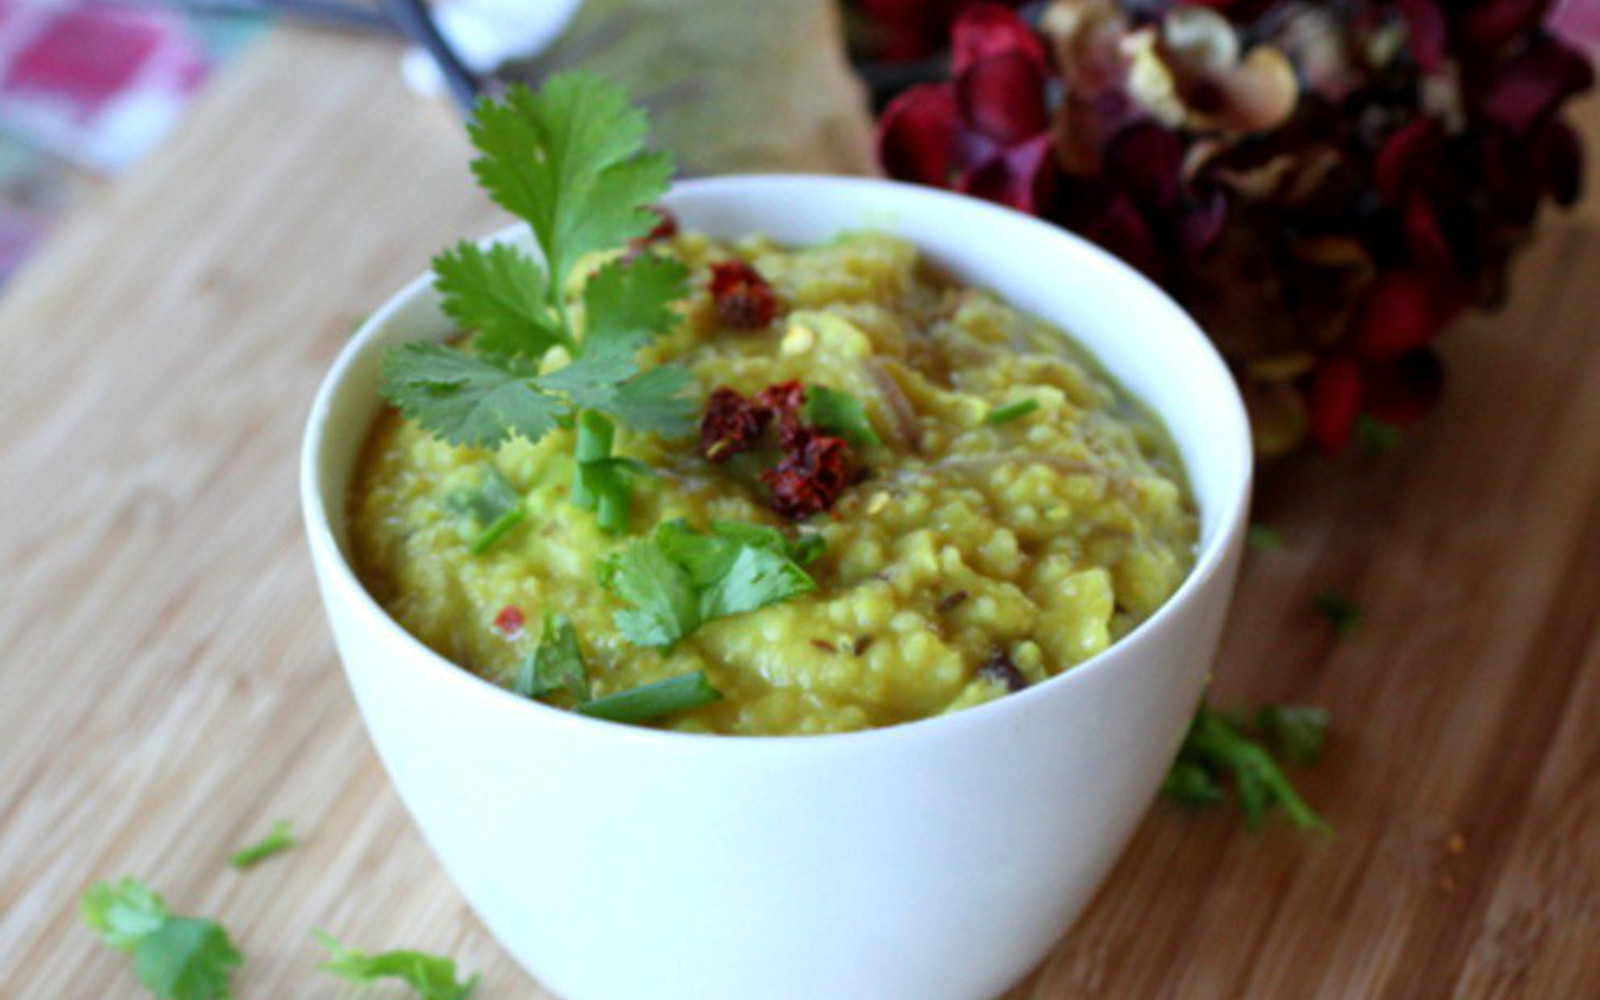 Vegan Lentil and Quinoa Kitchari with herbs